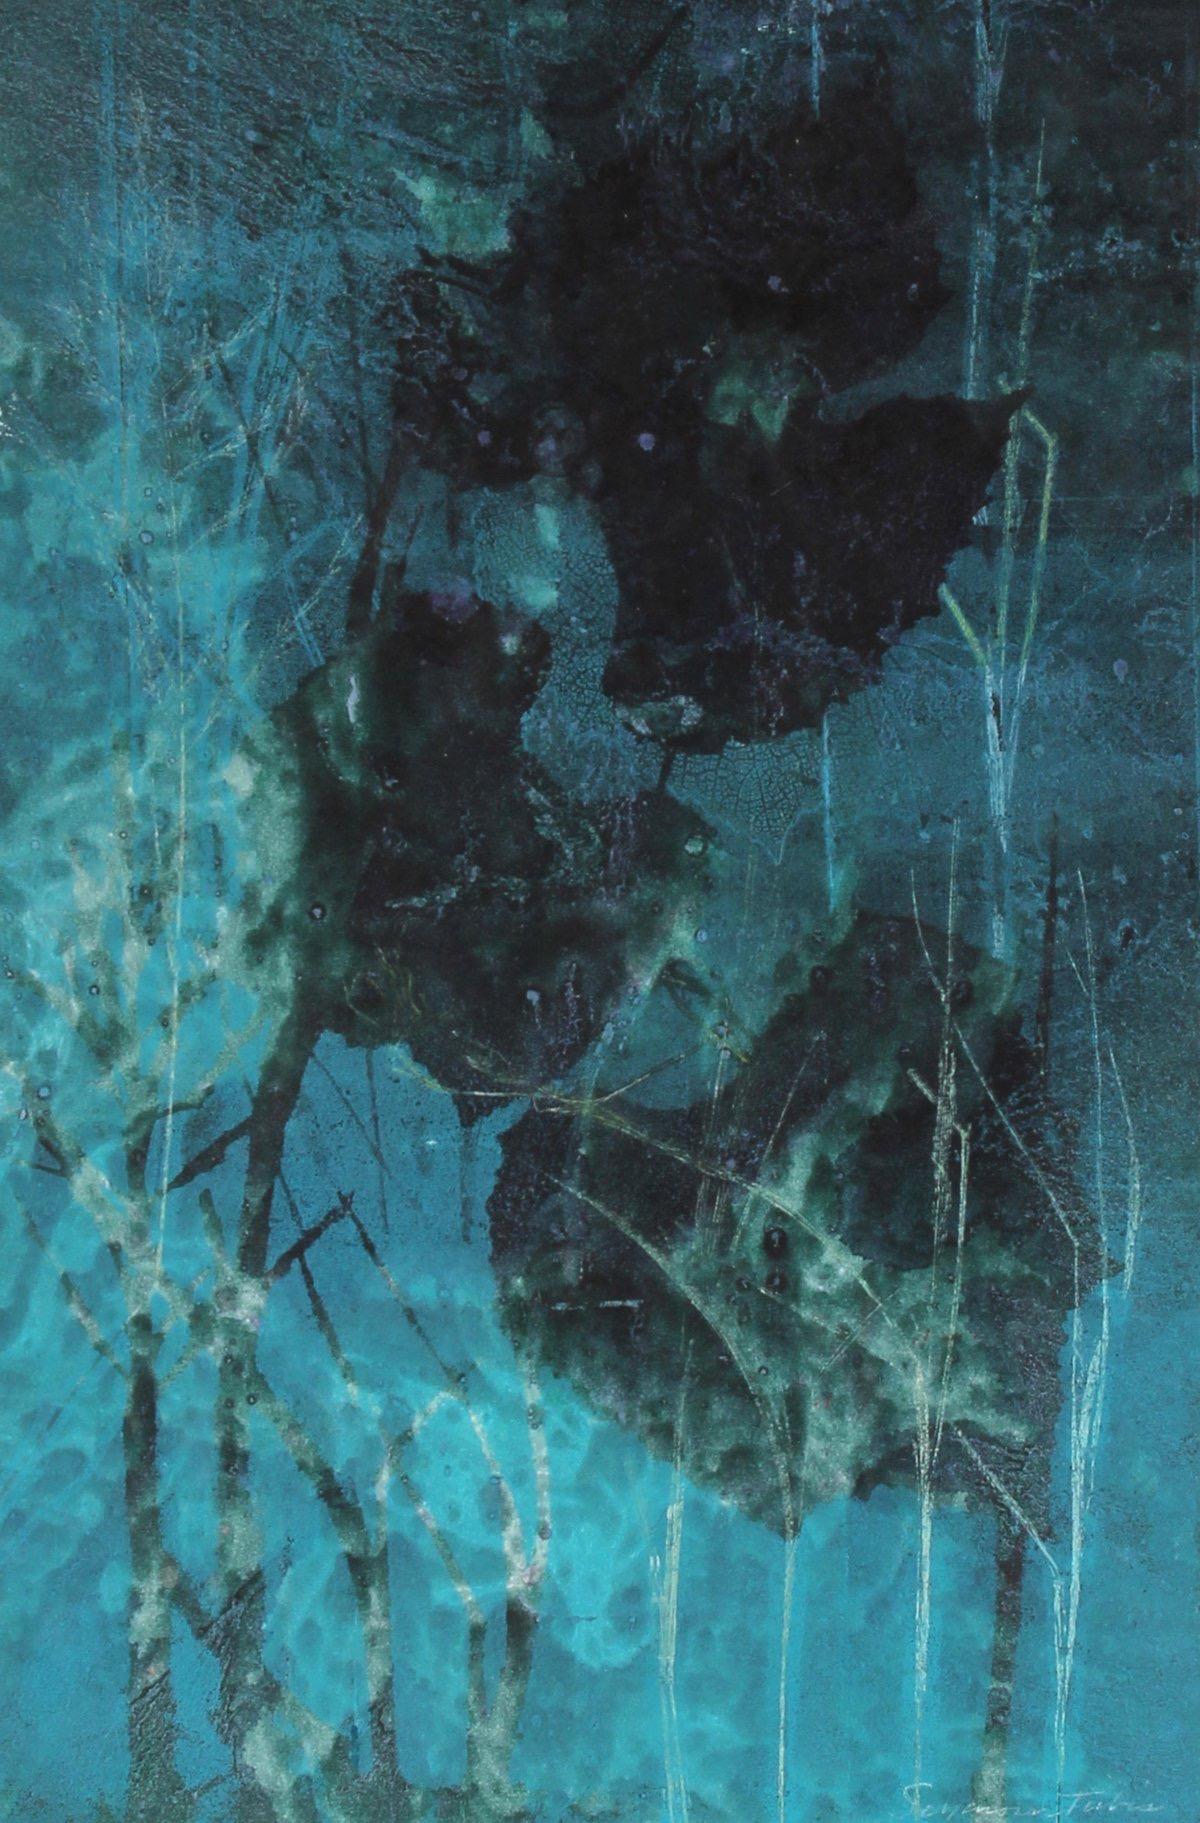 Seymour Tubis Landscape Print - "April" 1971 Original Mixed Media Print in Turquoise 